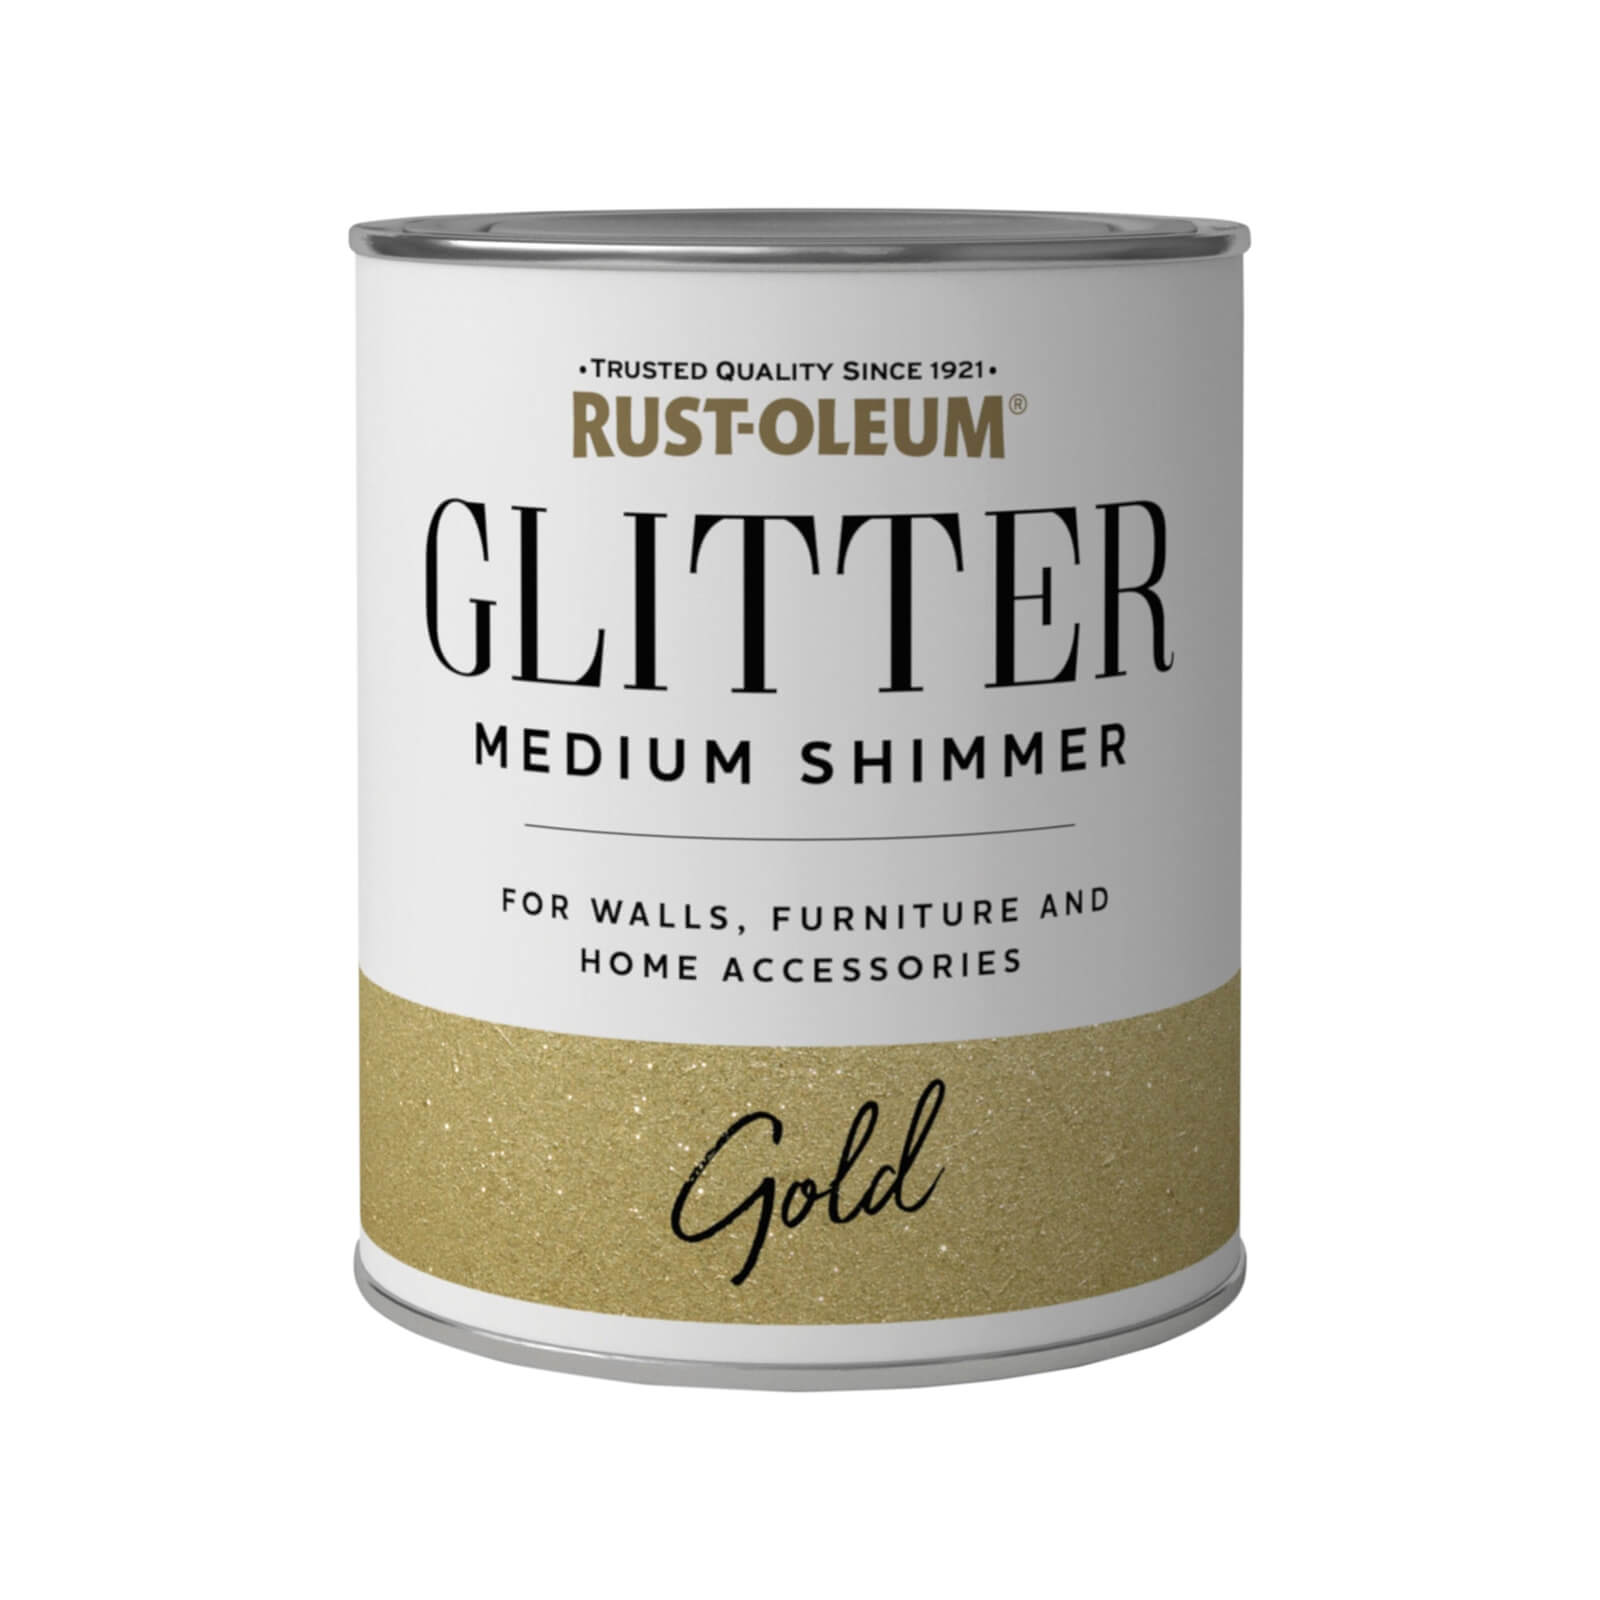 Photo of Rust-oleum Medium Shimmer Gold Glitter - 250ml